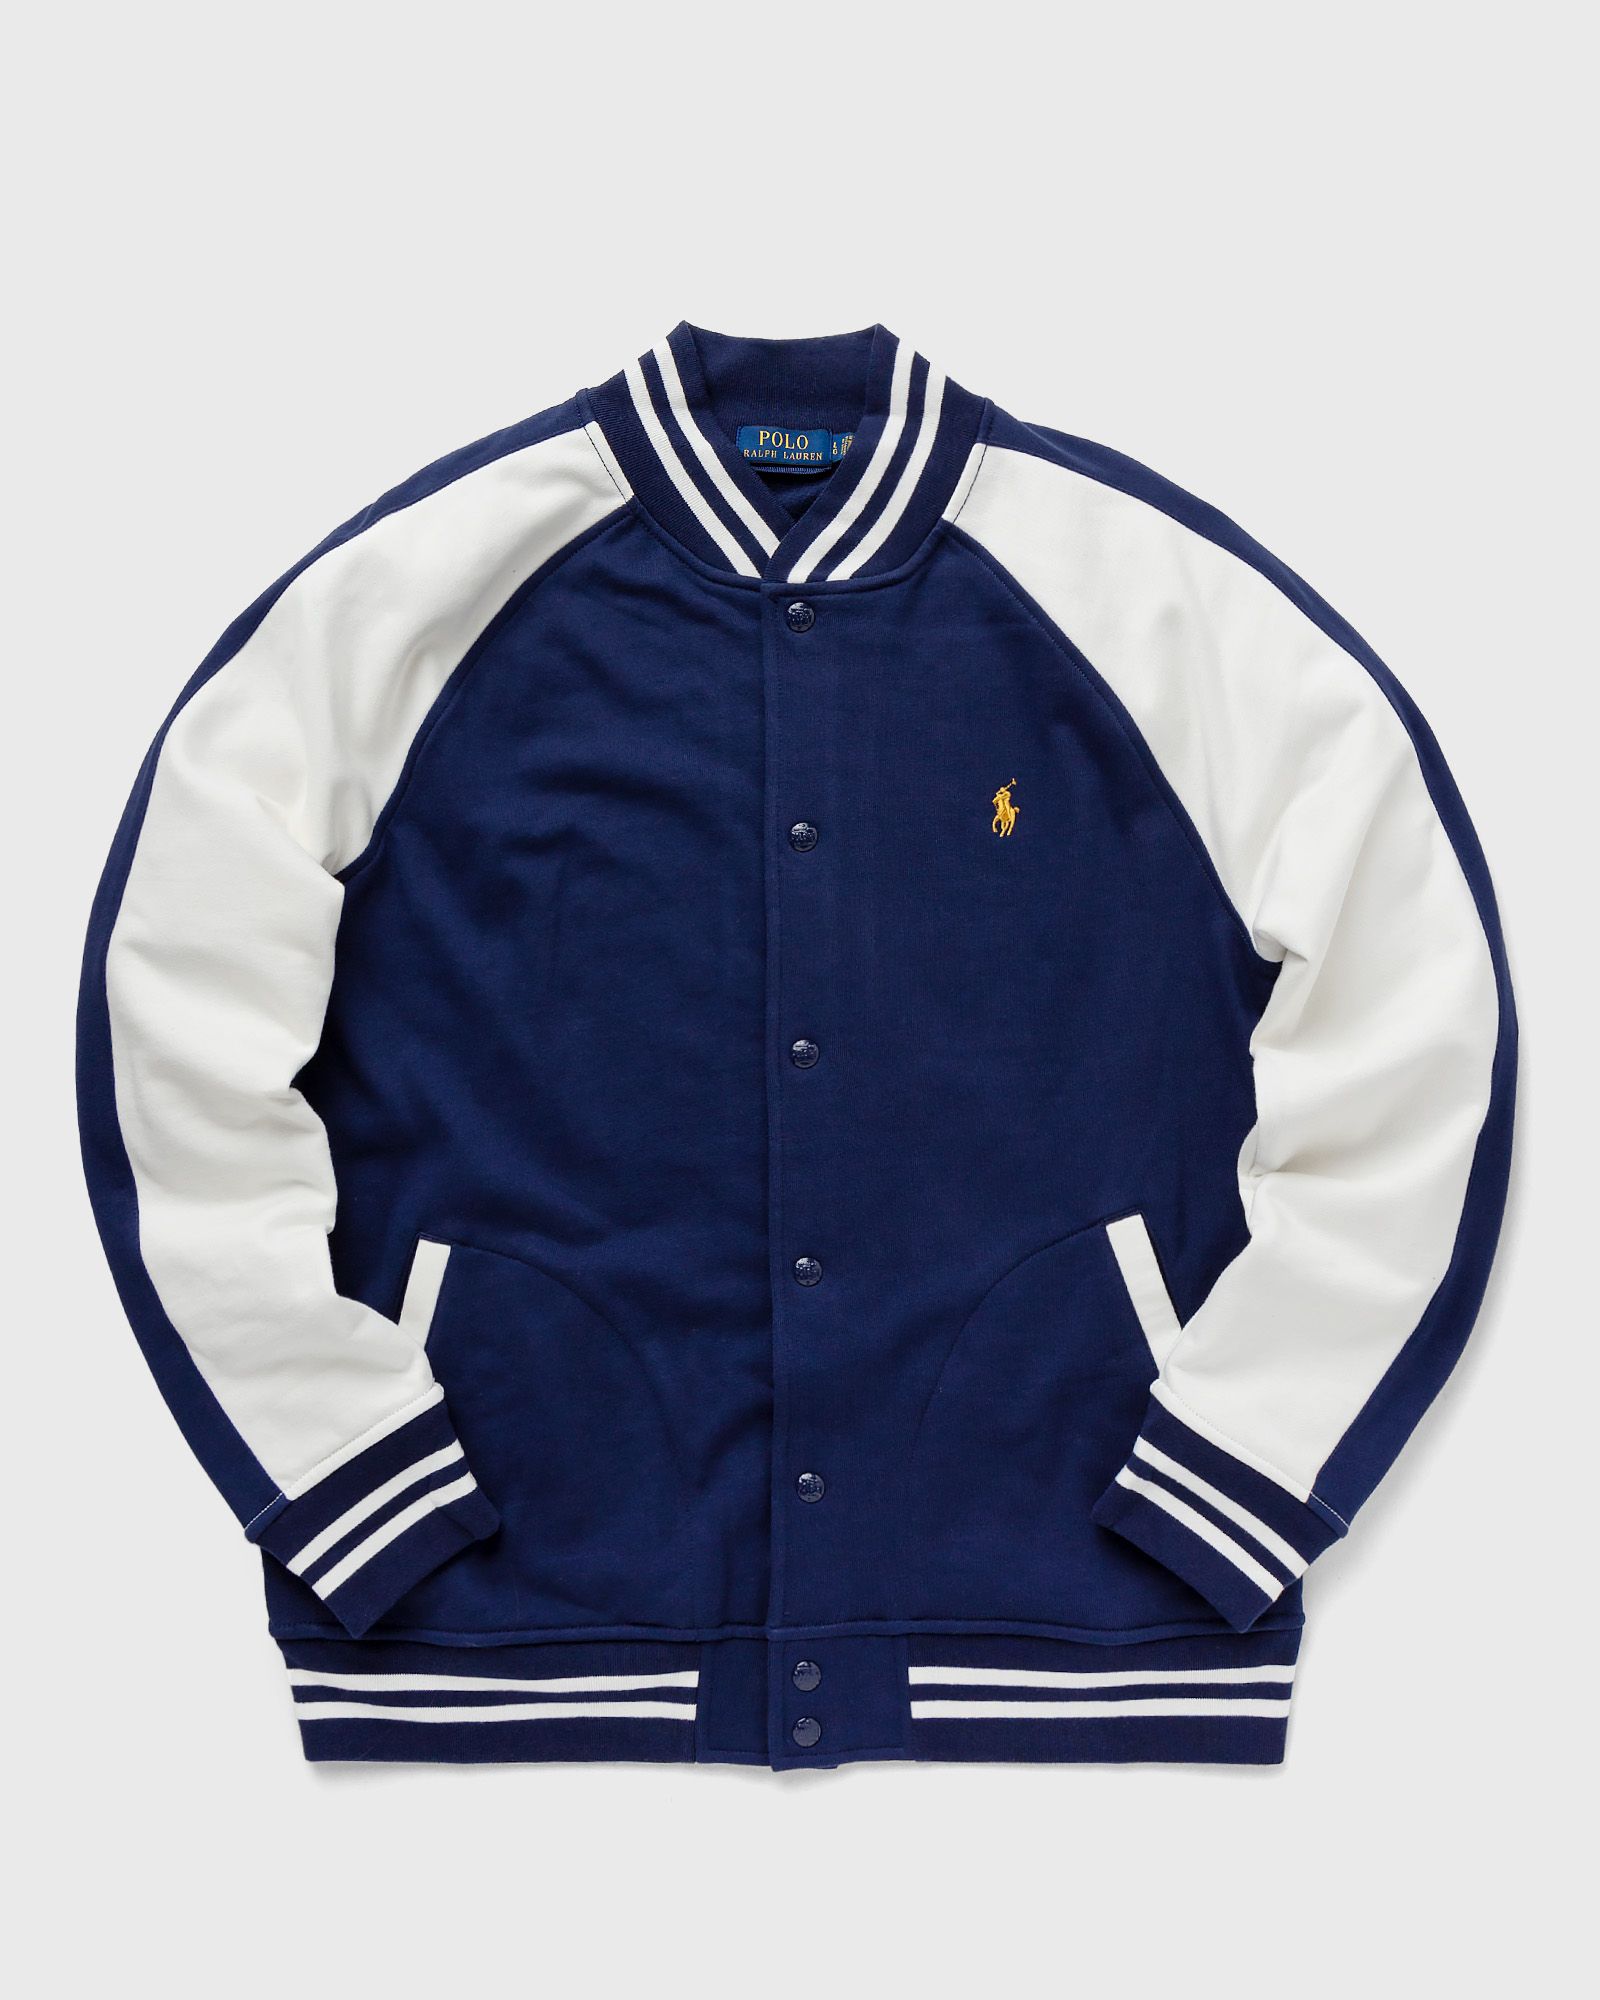 Polo Ralph Lauren - long sleeve-sweatshirt men college jackets blue|white in größe:xl